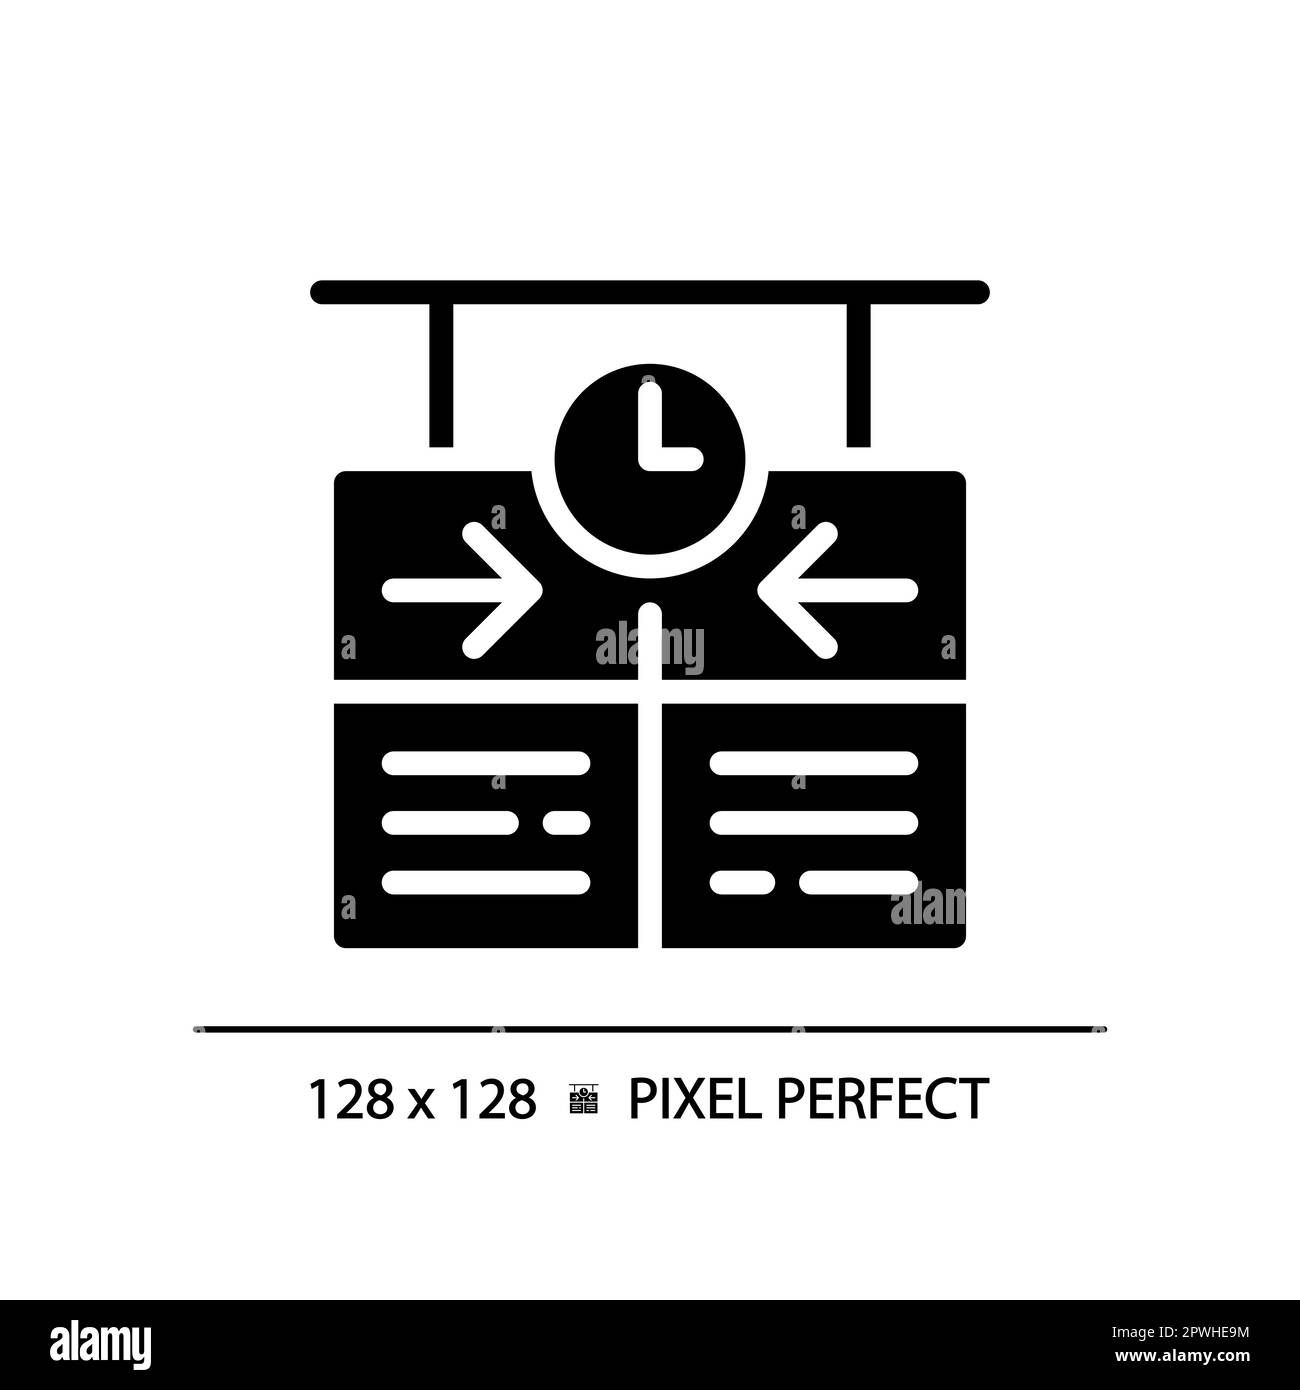 Timetable pixel perfect black glyph icon Stock Vector